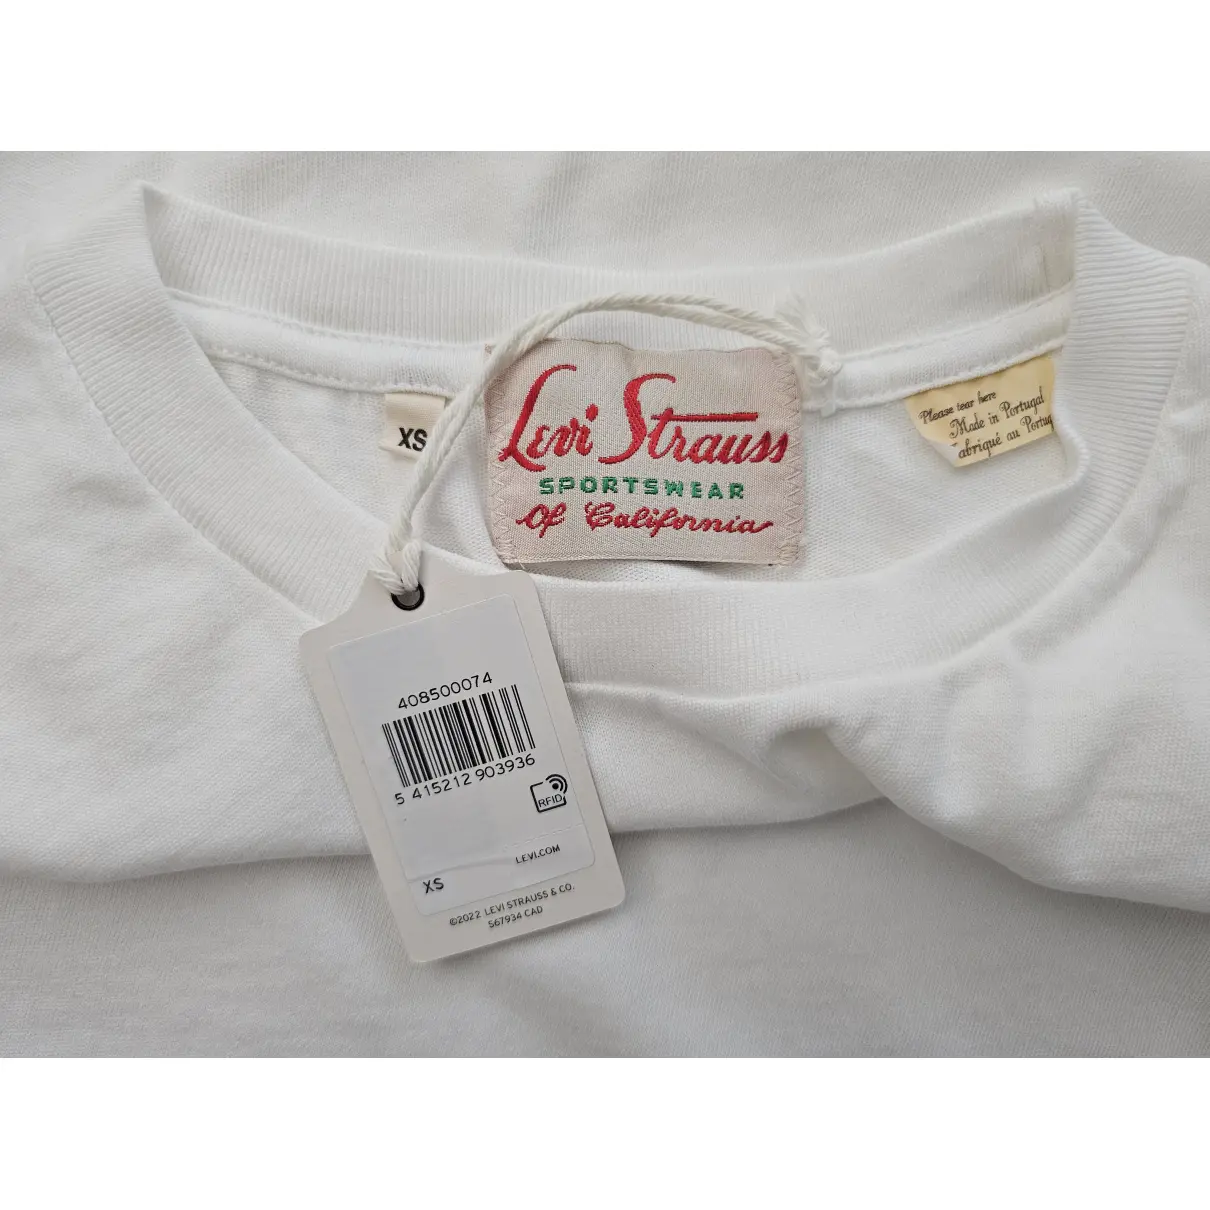 T-shirt Levi's Vintage Clothing - Vintage